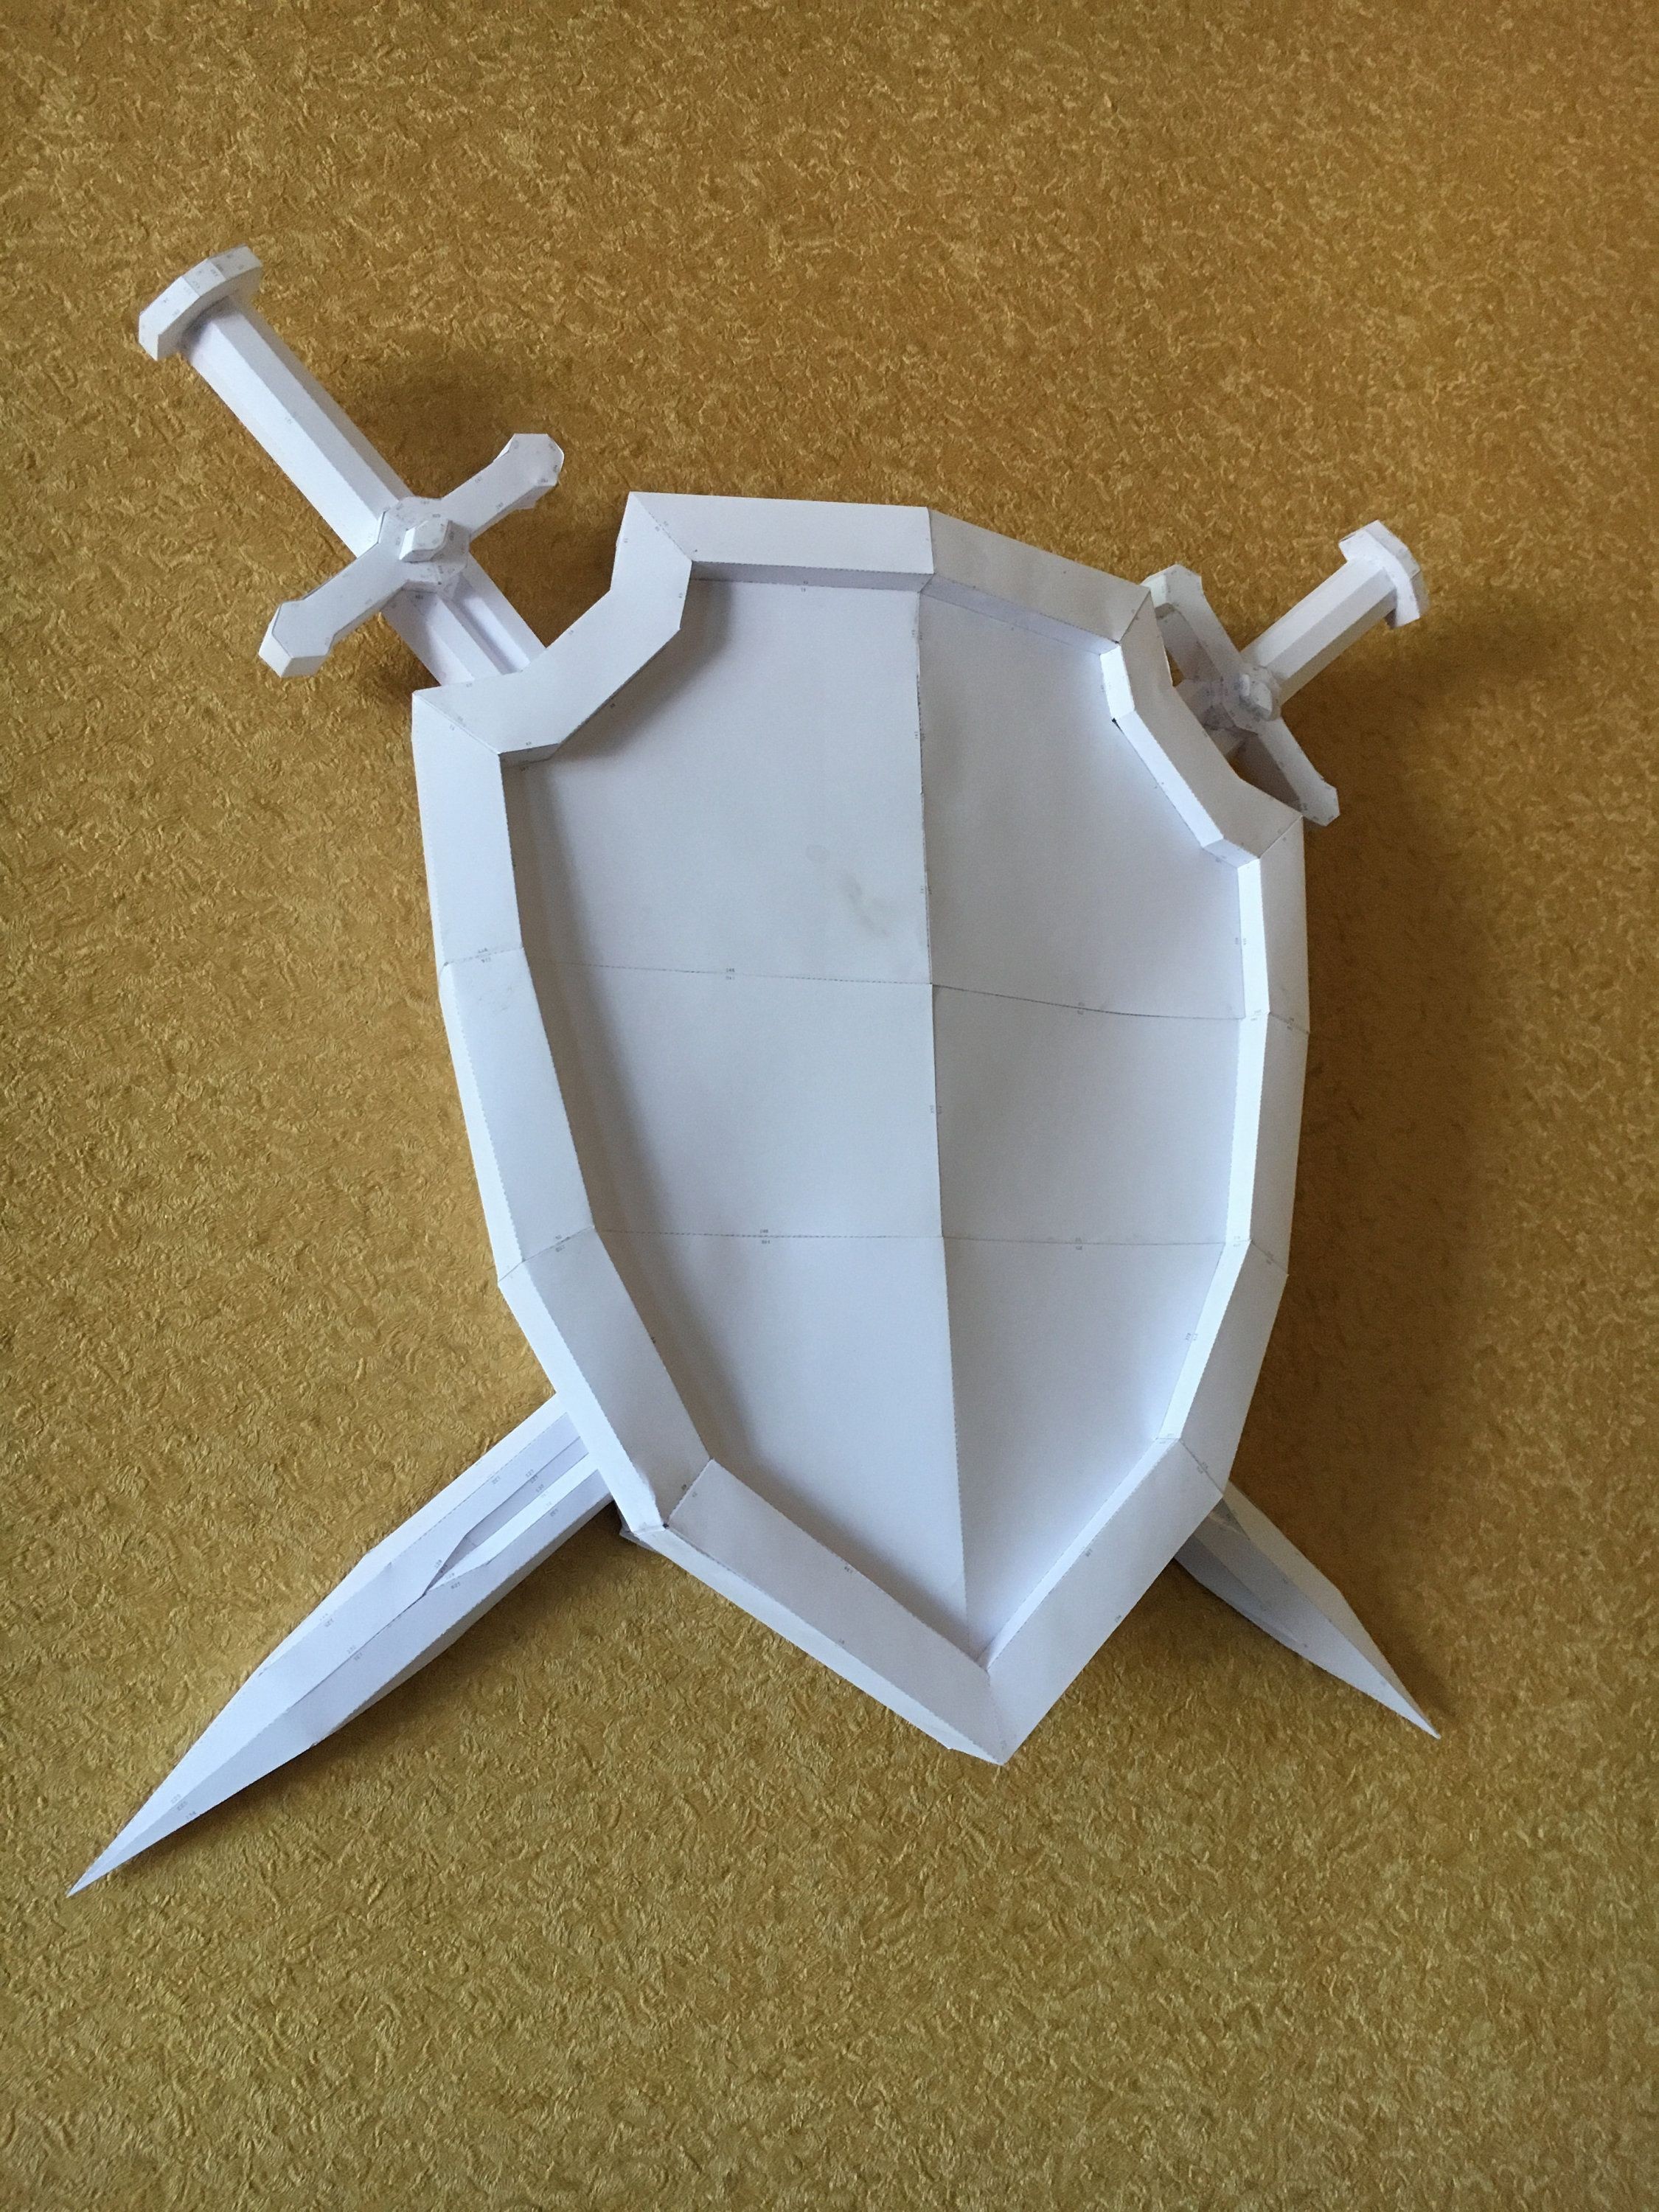 Ninjatoes Papercraft Sword Shield Diy Papercraft Model ÐÑÐ¼Ð°Ð¶Ð½ÑÐµ Ð¸Ð·Ð´ÐµÐ Ð¸Ñ